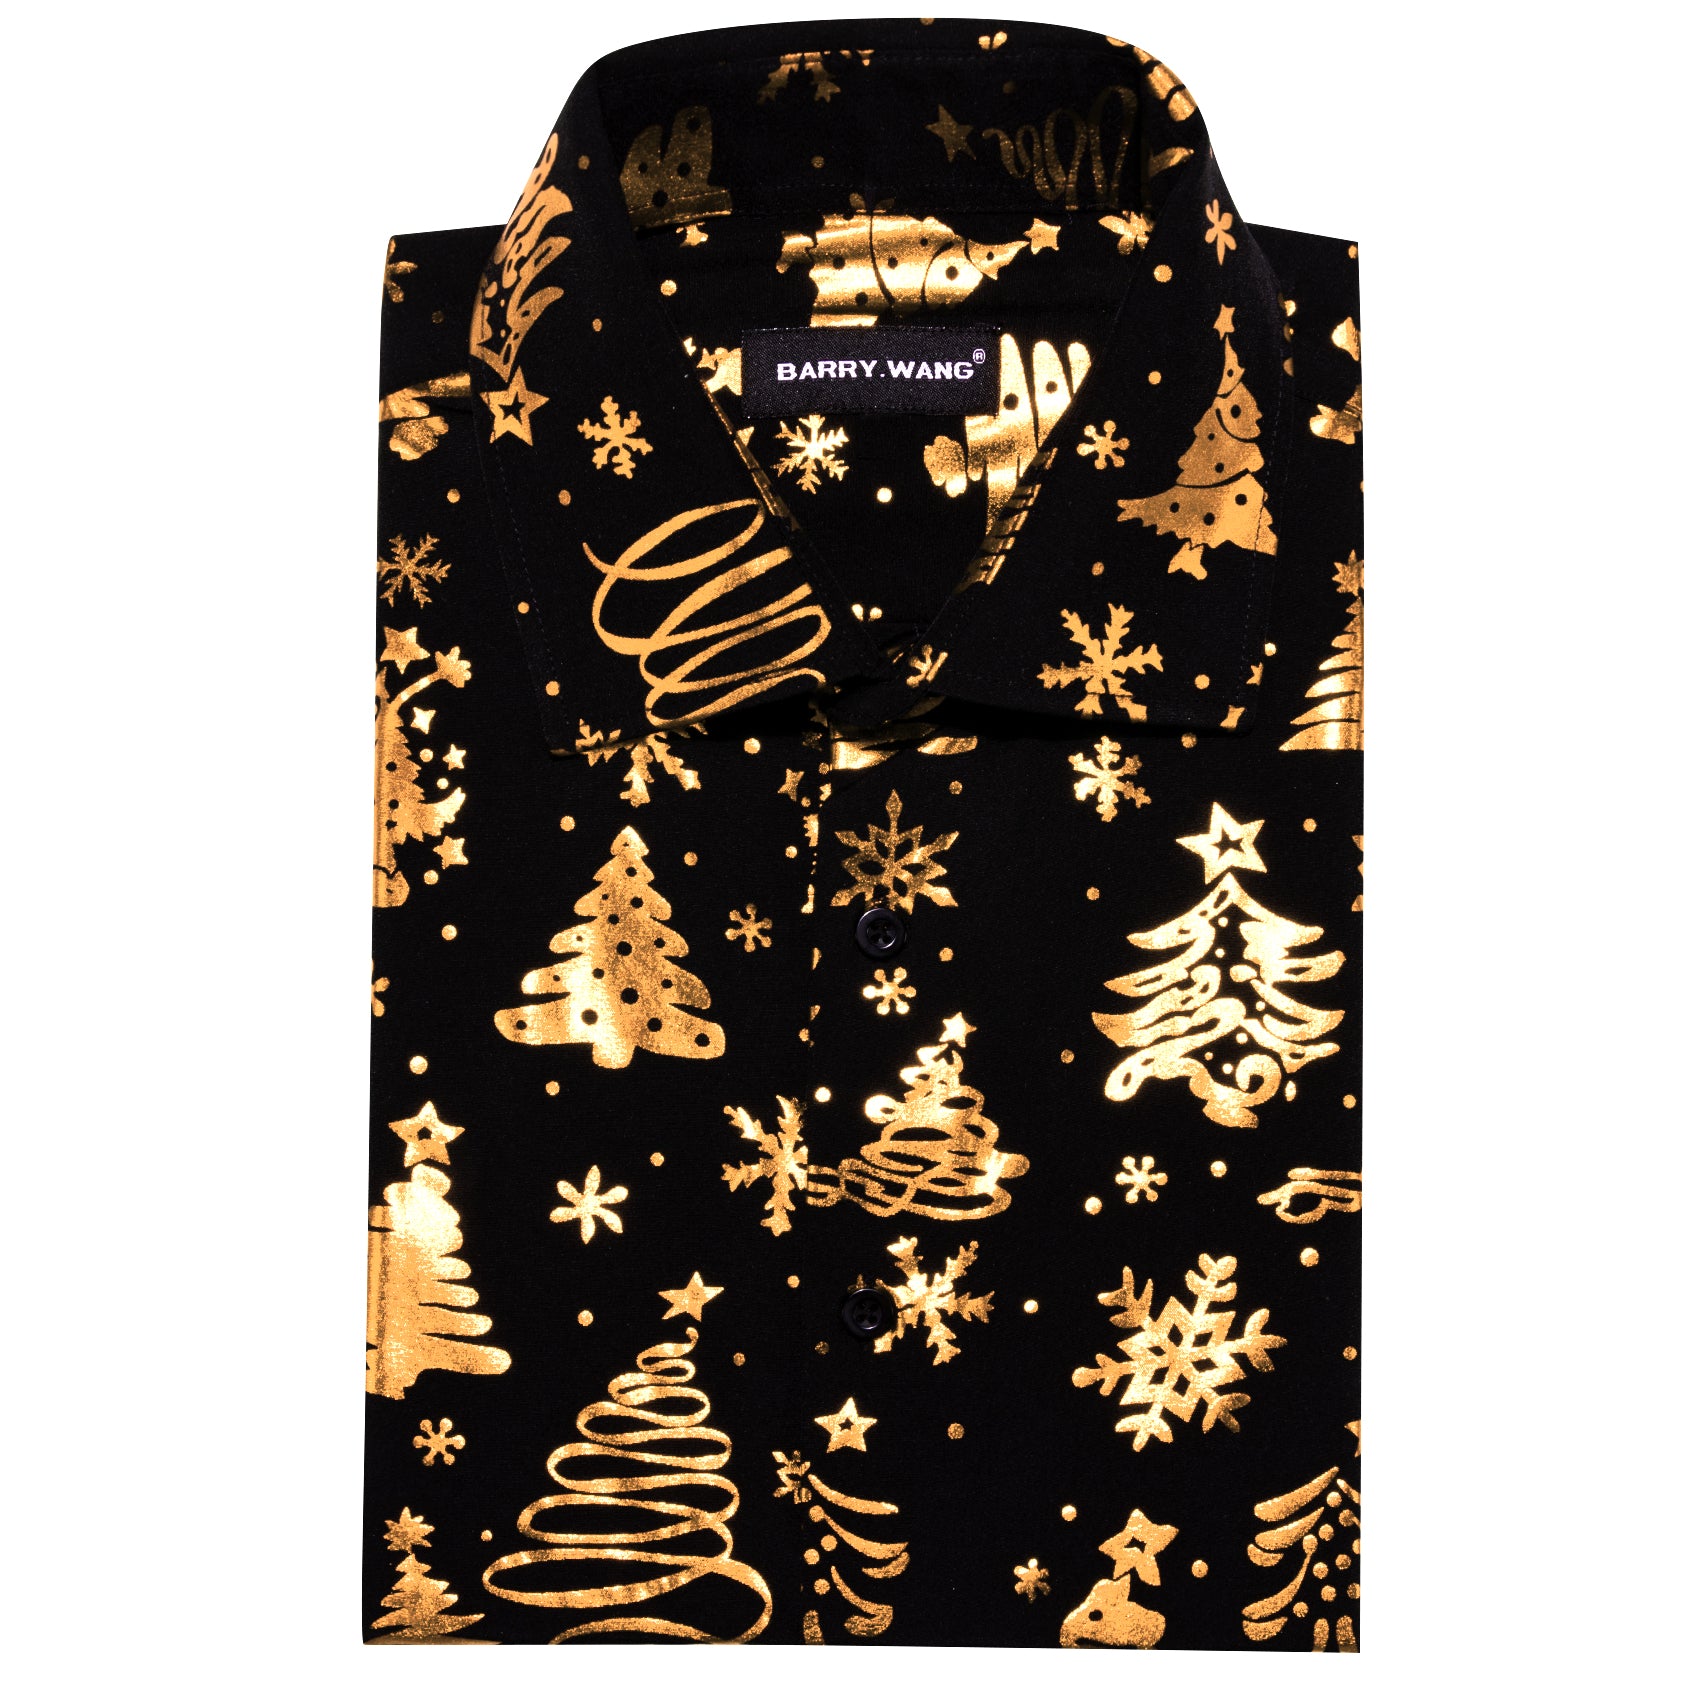 Barry.wang Christmas Shirt Black Gold Xmas Tree Floral Silk Men's Shirt